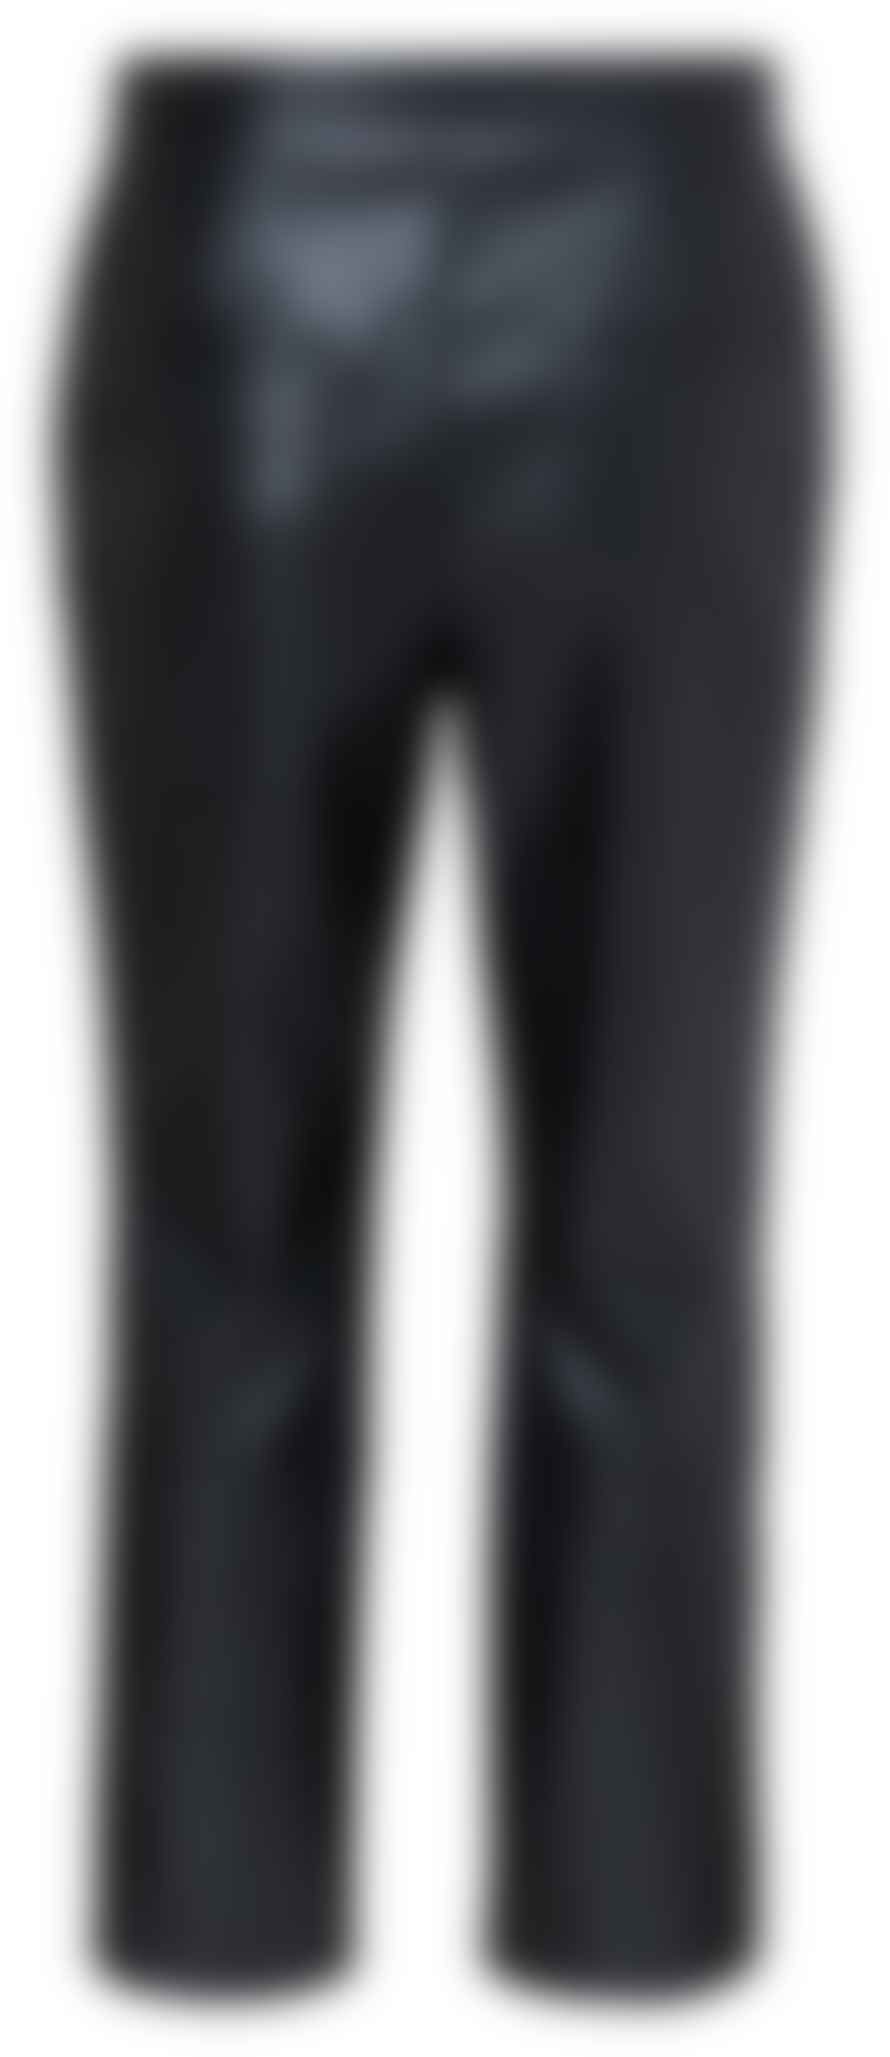 Yaya Faux Leather 7/8 Trousers - Black 